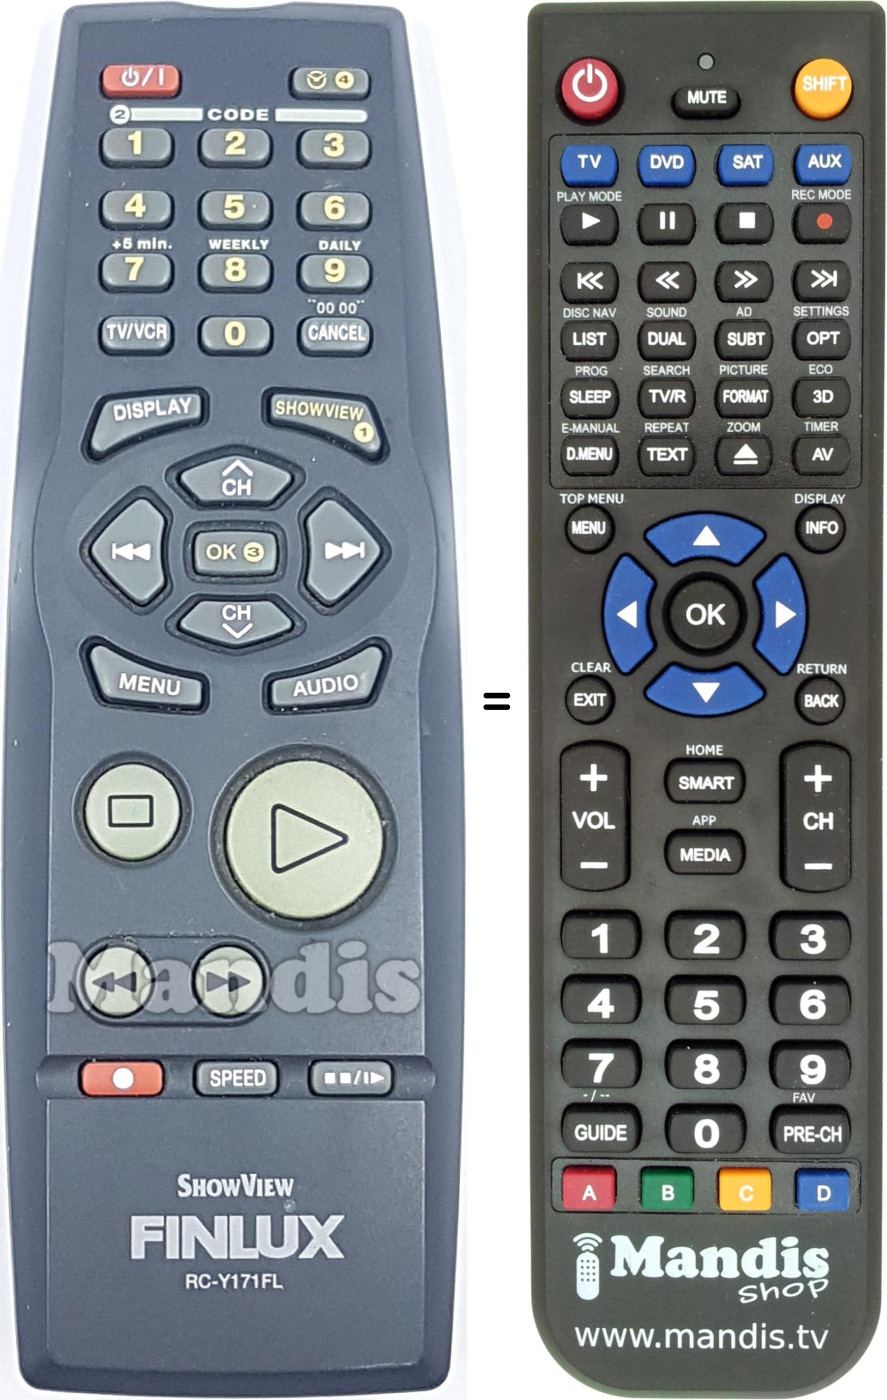 Replacement remote control RC-Y171FL